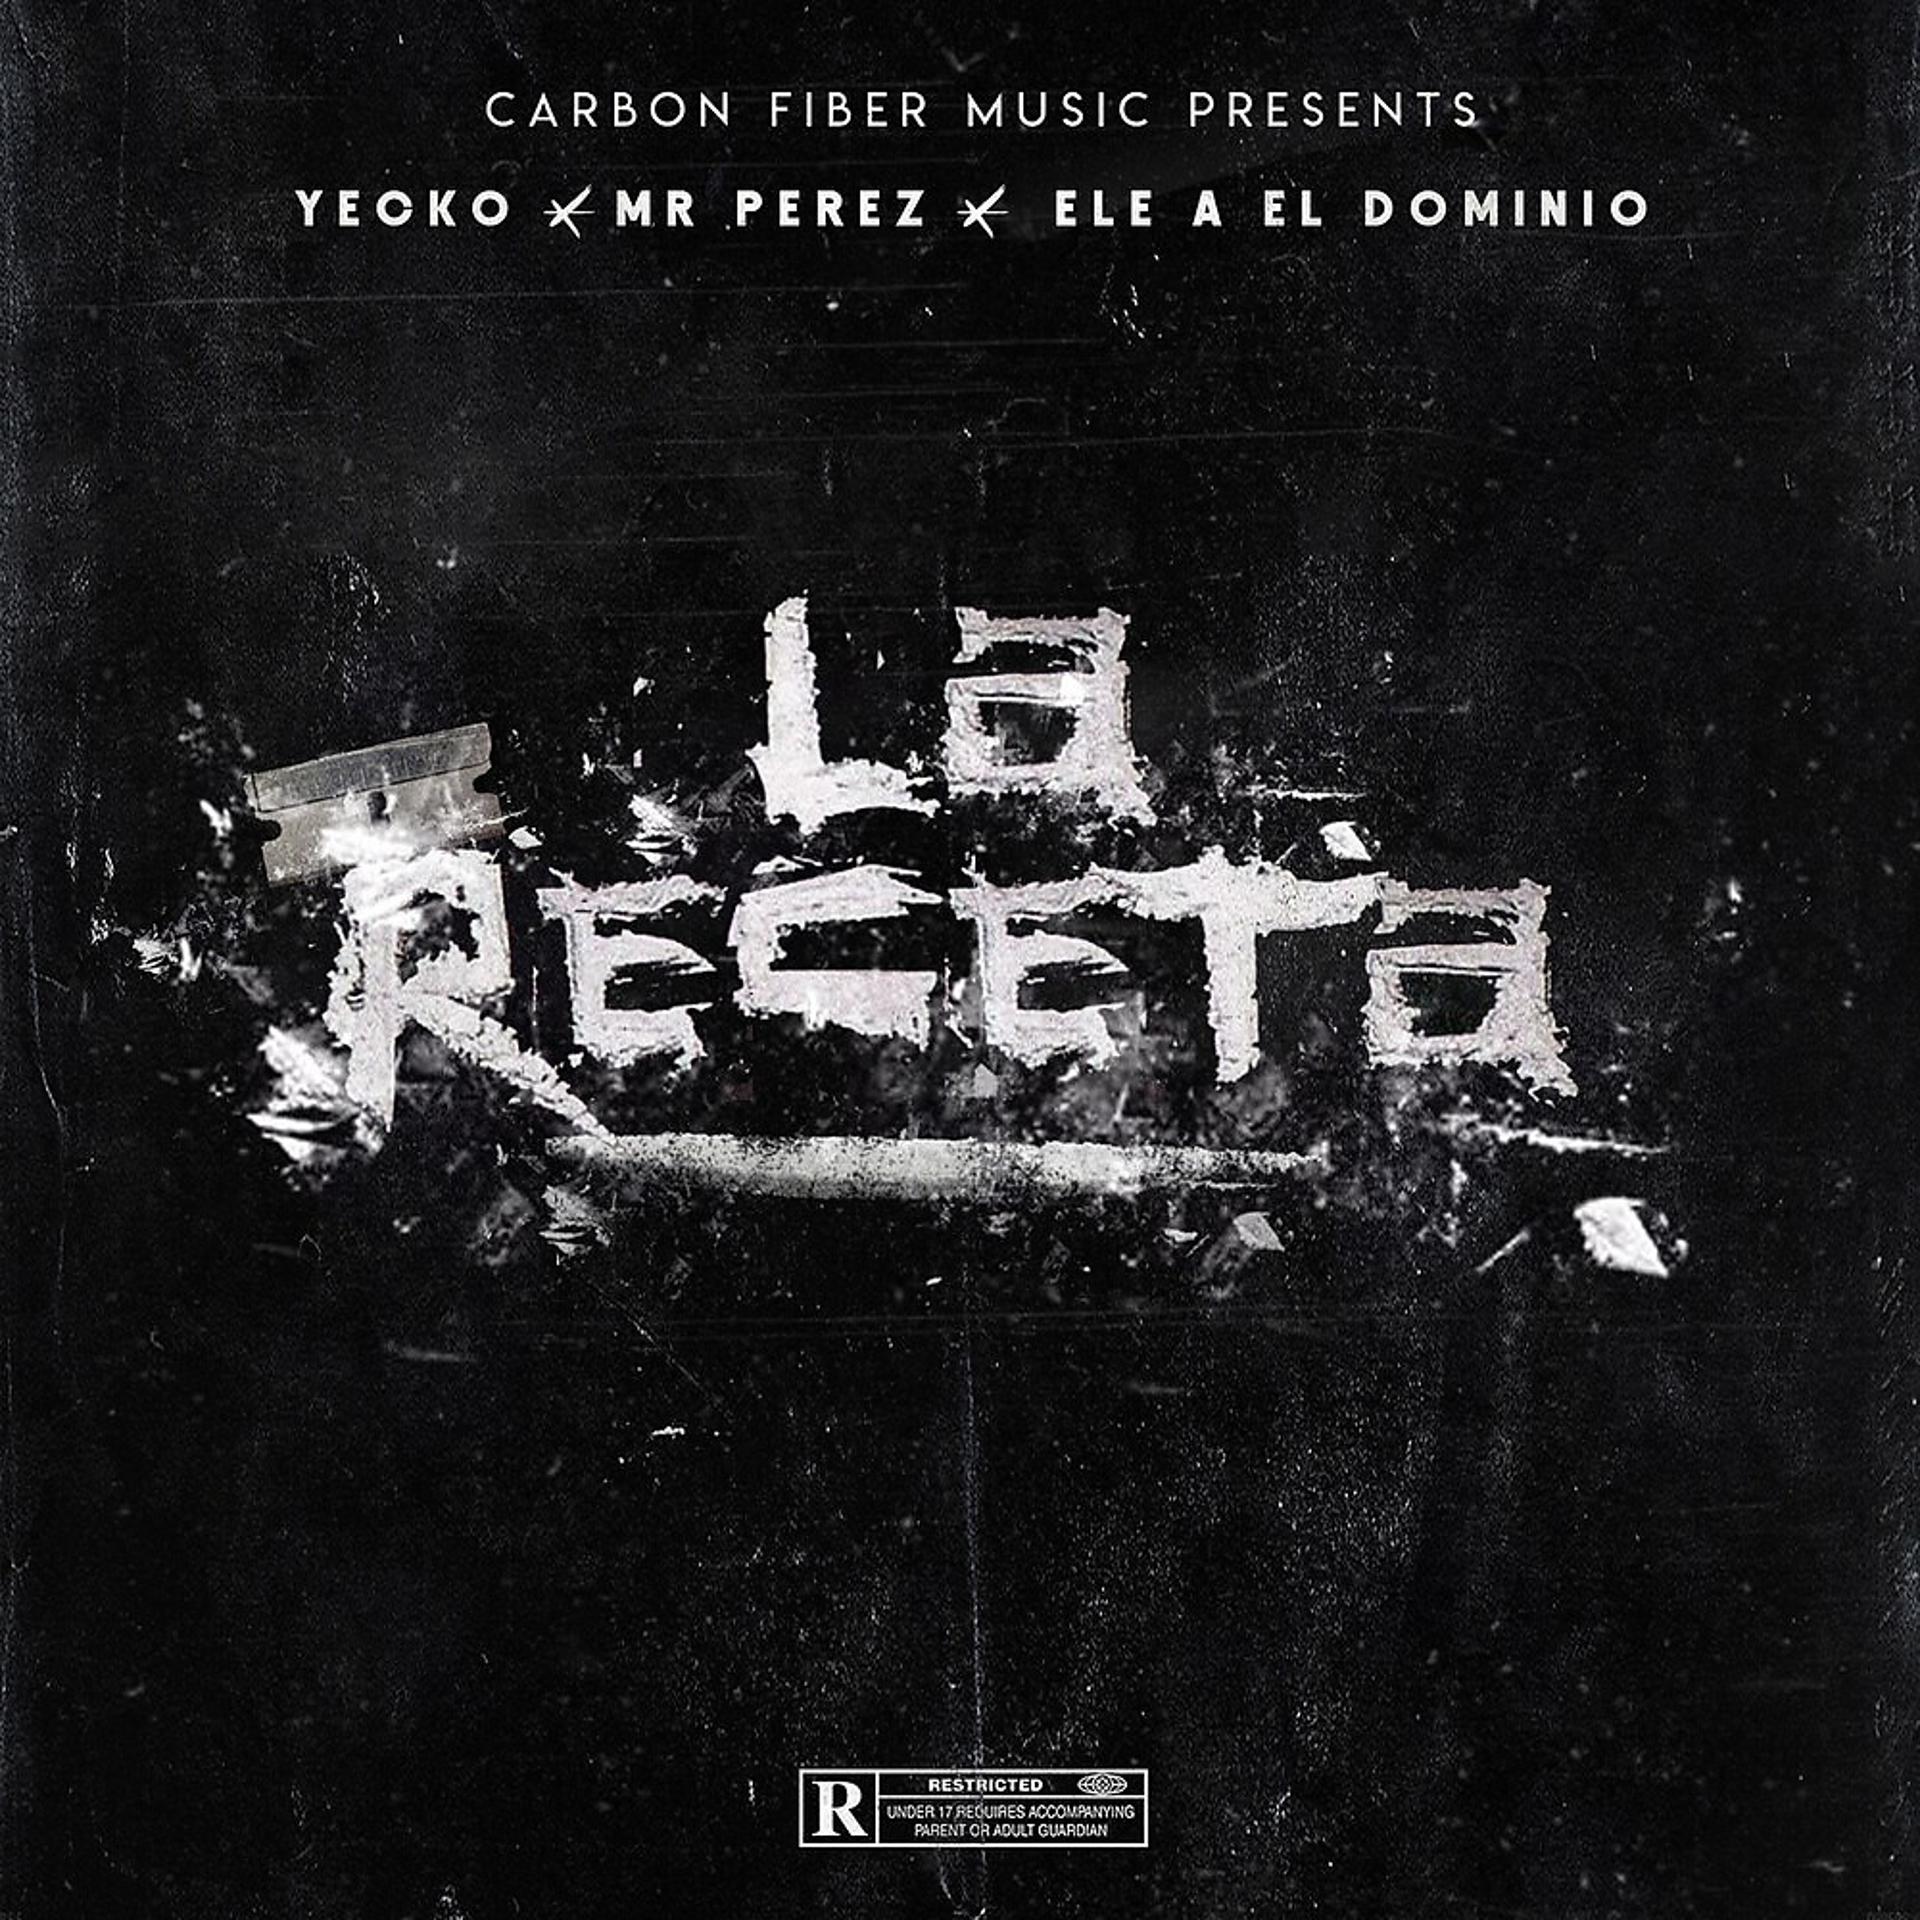 Постер альбома La Receta